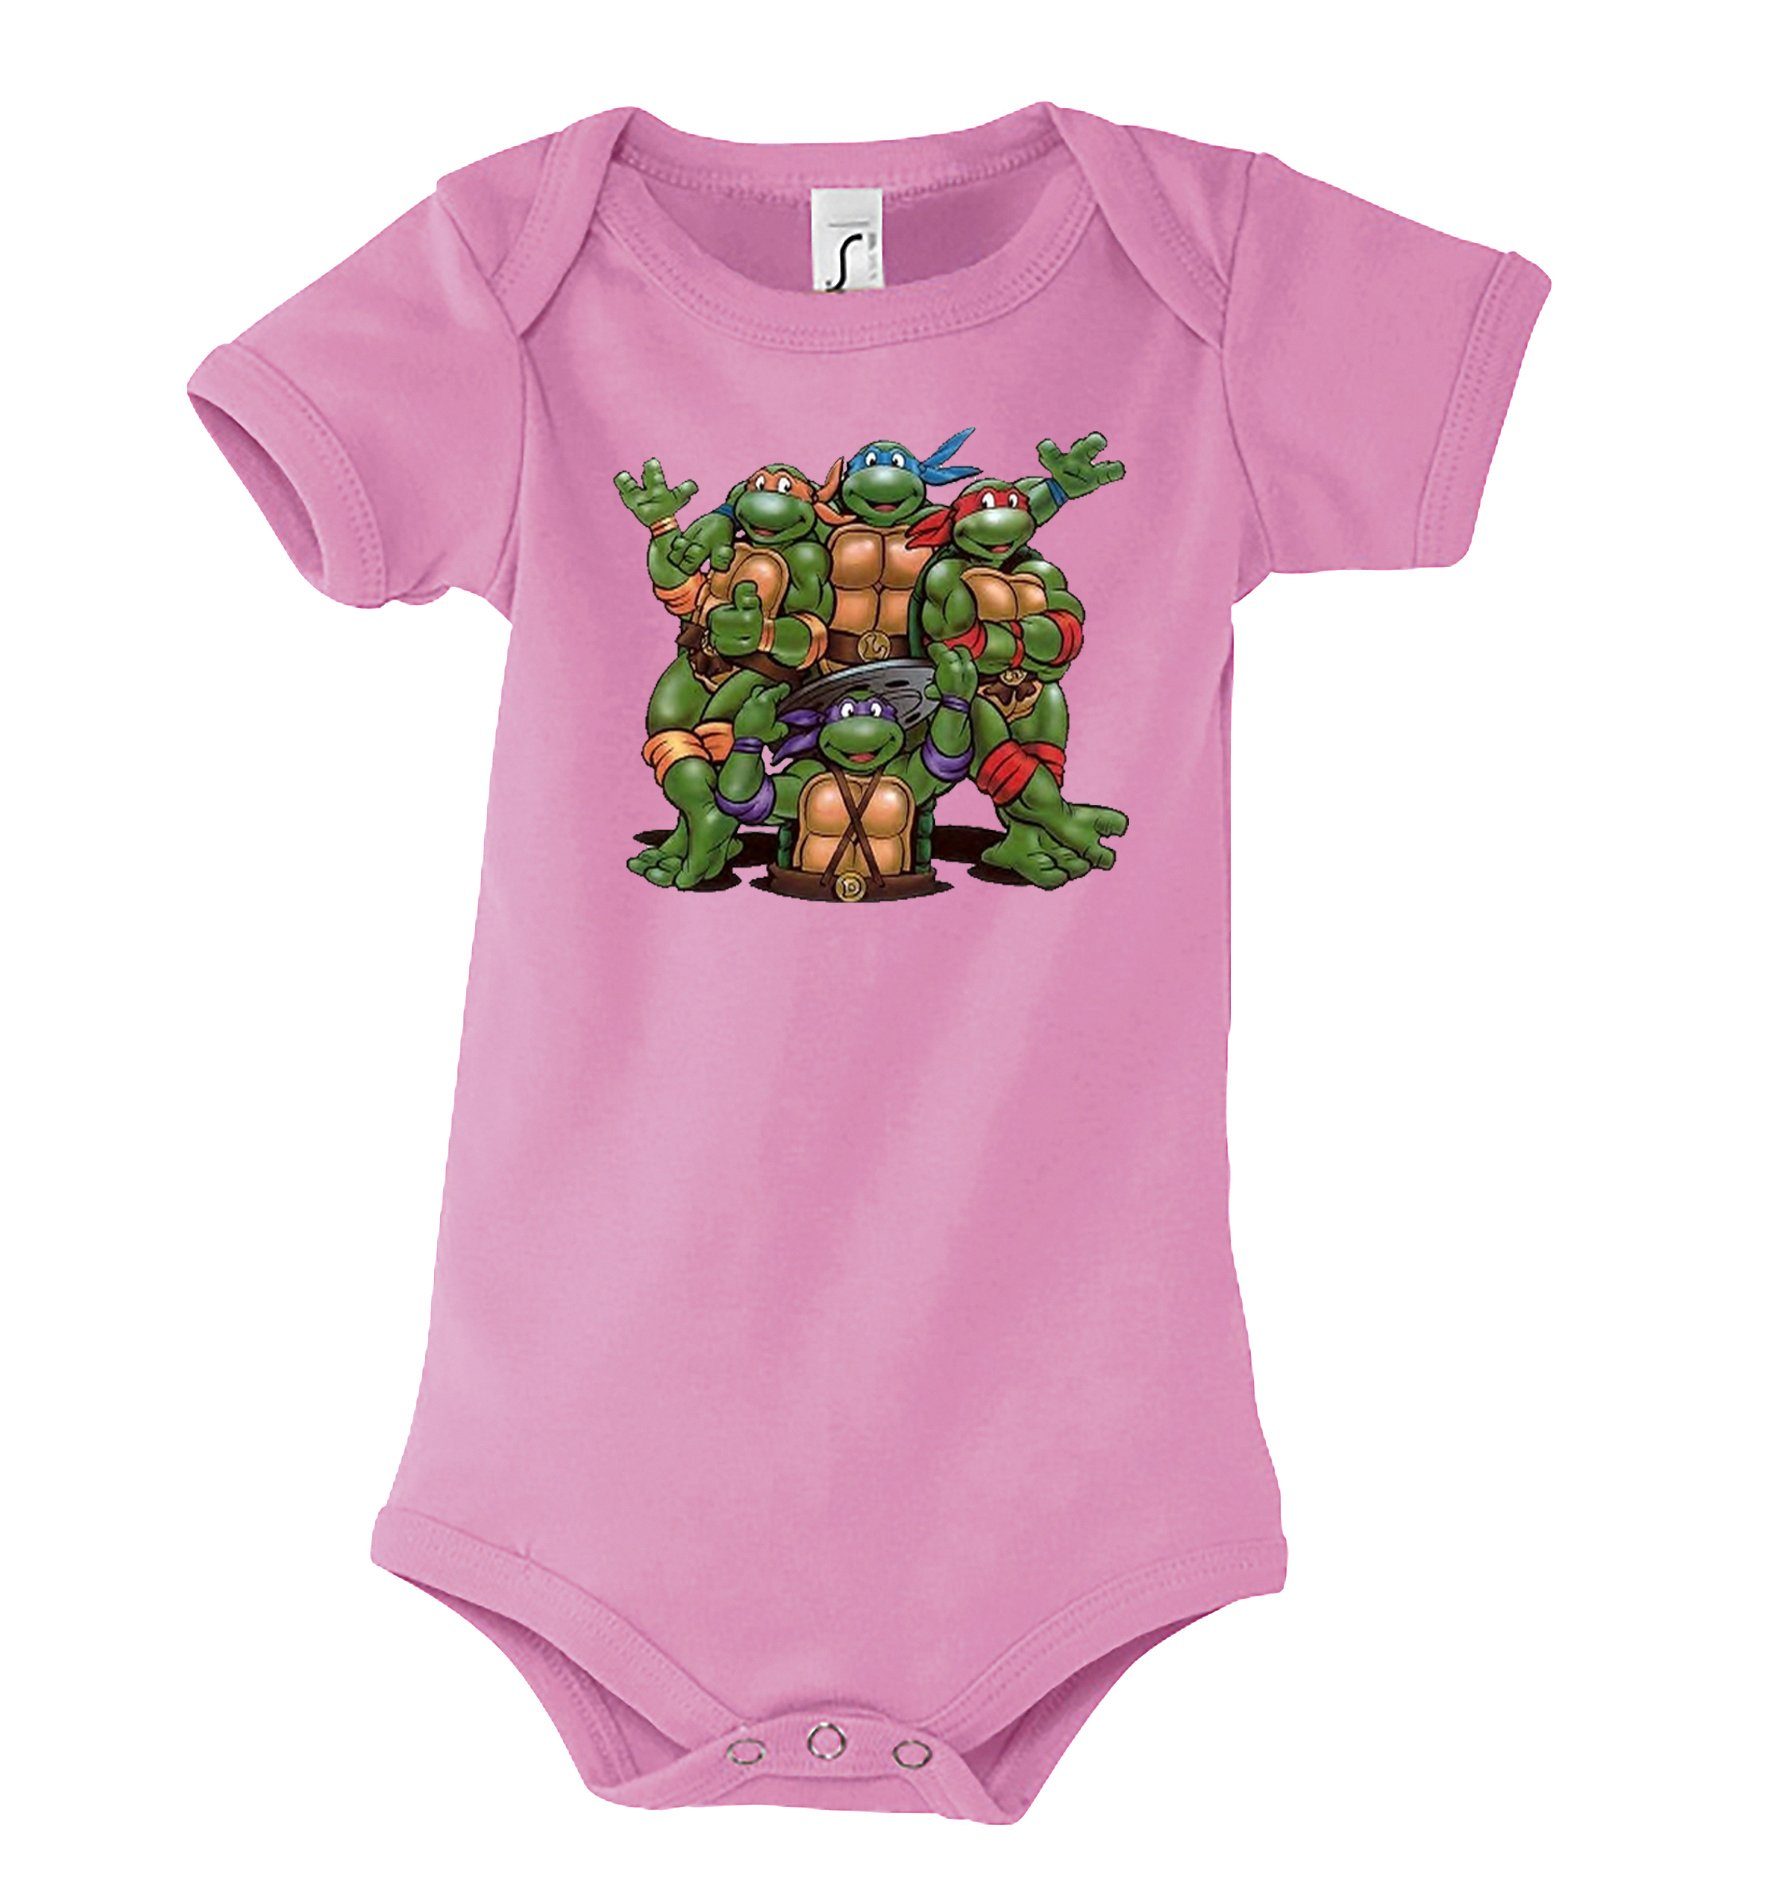 Youth Designz Kurzarmbody Baby Body Strampler Turtles in tollem Design, mit Frontprint Rosa